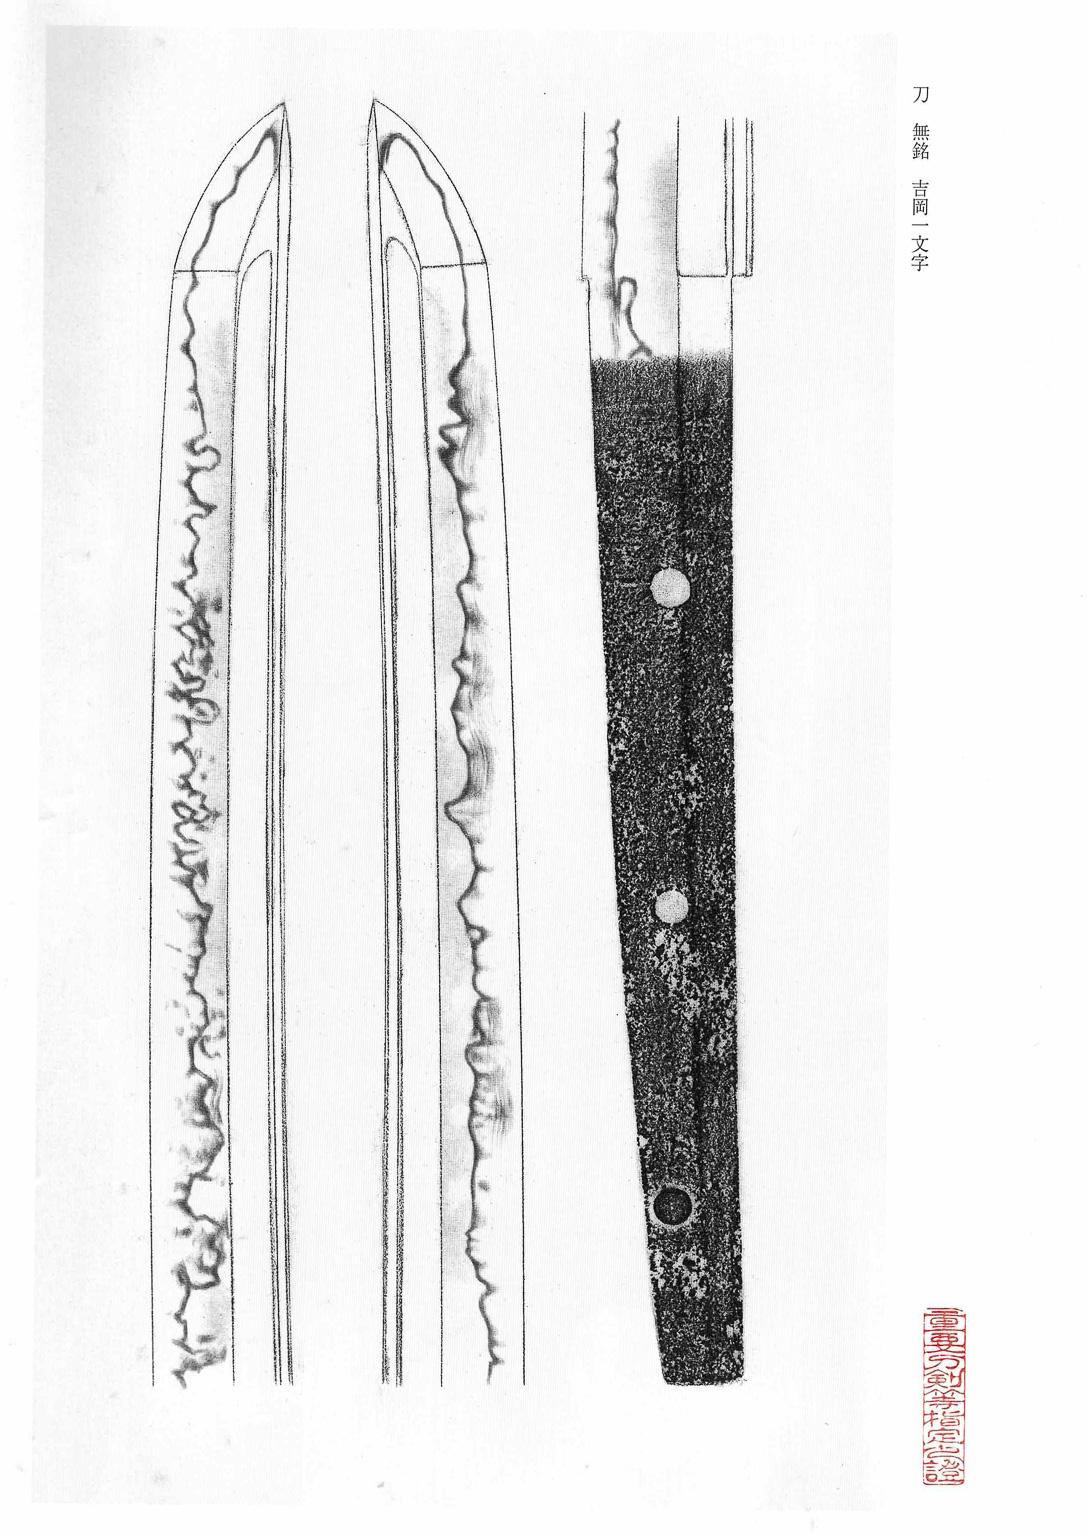 Katana named “Yakumo” (“Stratus clouds”)
An important Bizen samurai sword by the Yoshioka Ichimonji school
Late Kamakura Period, circa 1320

NBTHK Juyo Token

 

Measures: Nagasa [length]: 67.3 cm

Motohaba [bottom width]: 2.8